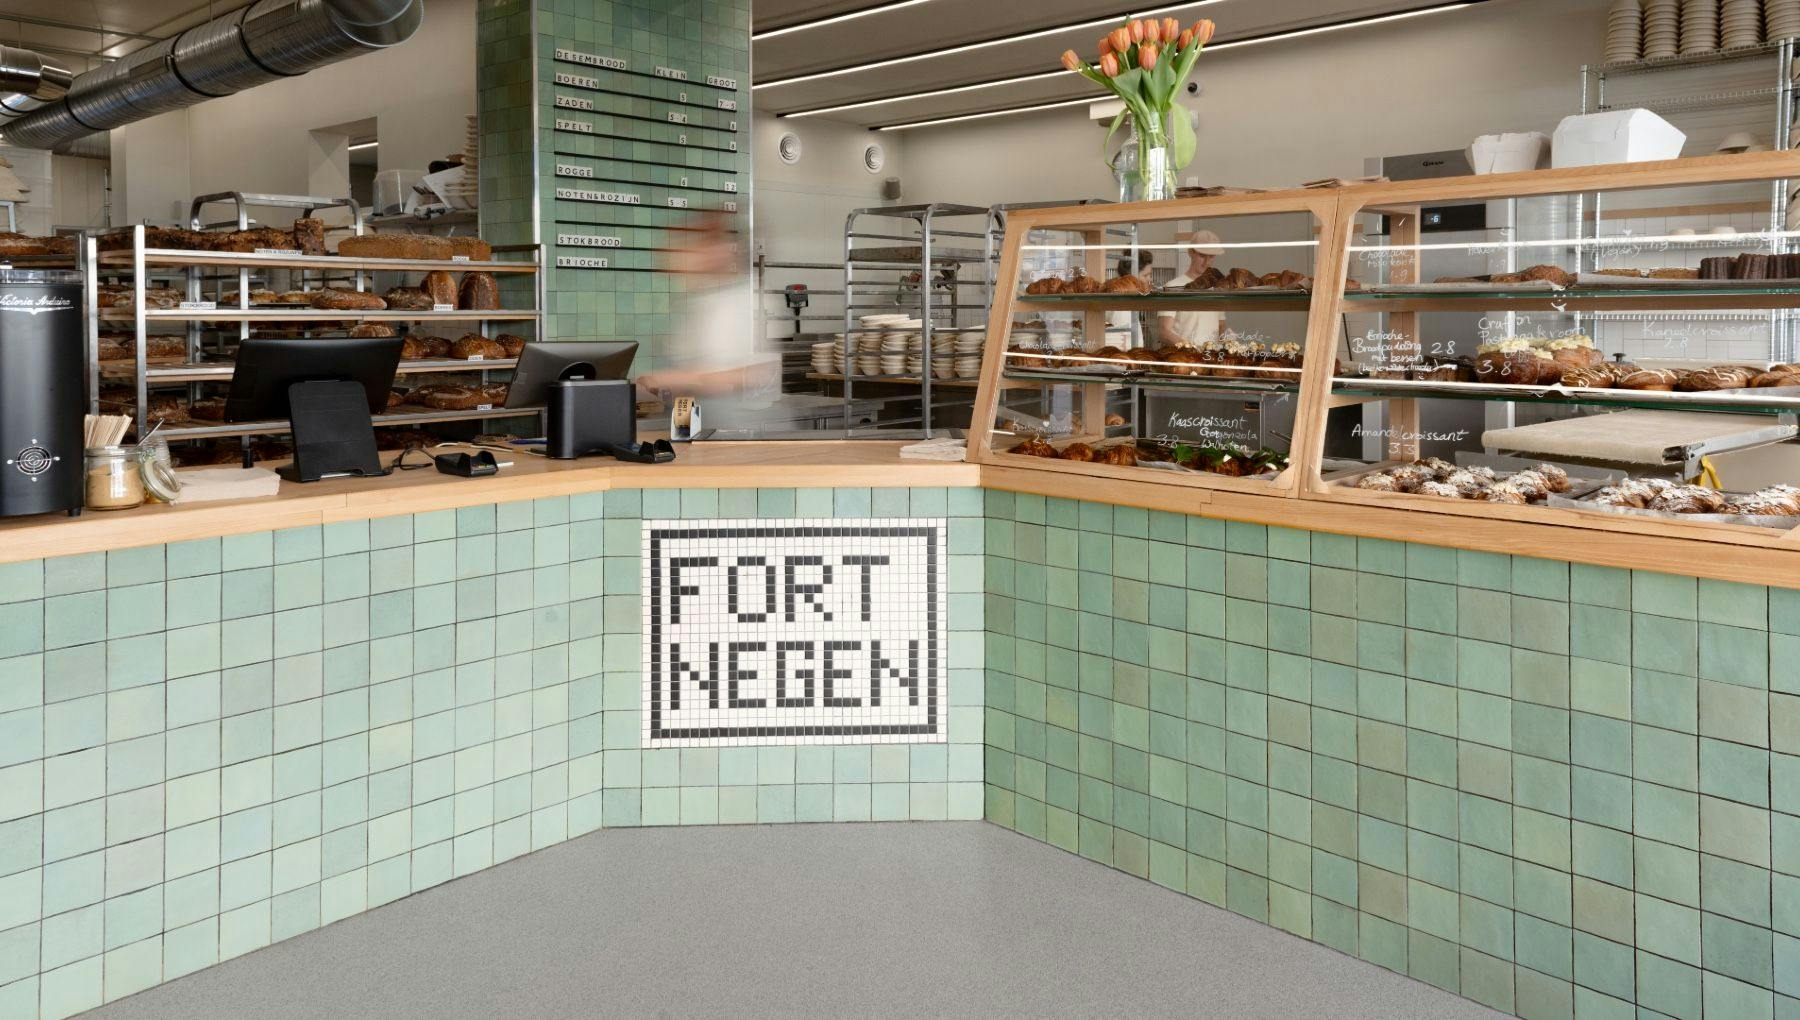 Fort Negen bakery